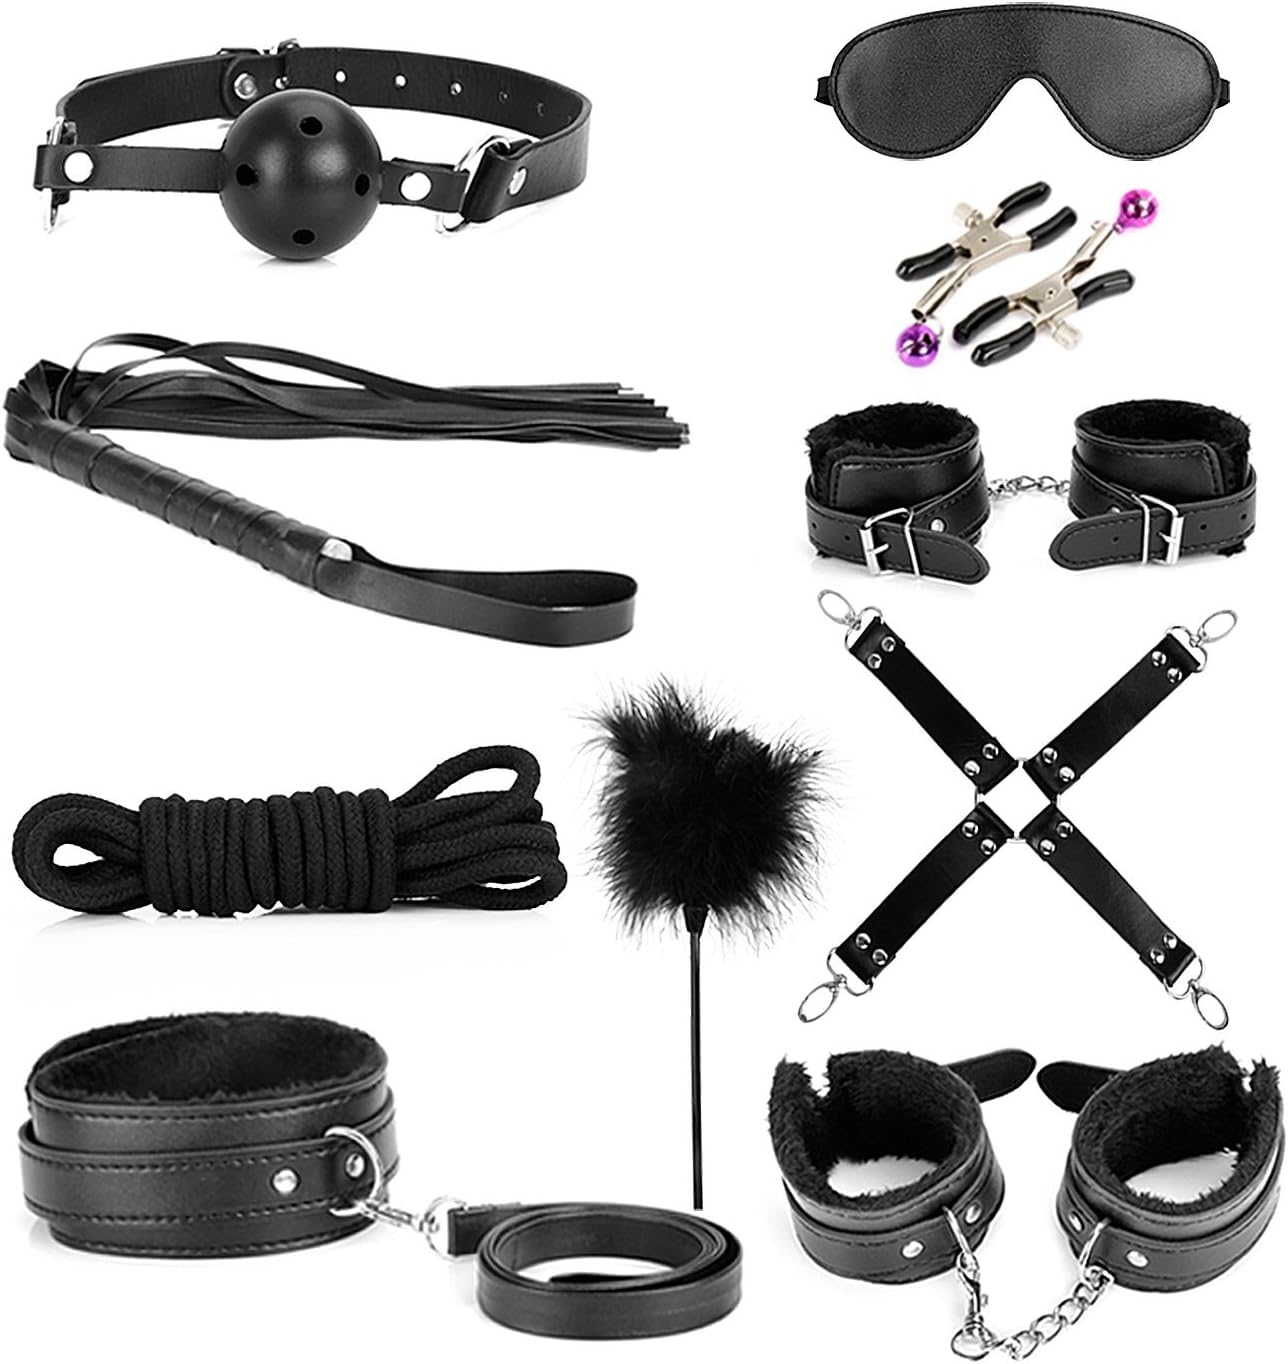 Bondage Kit, 10 Piece Set Love Cuffs, Black   price checker   price checker Description Gallery Reviews Variations Additional